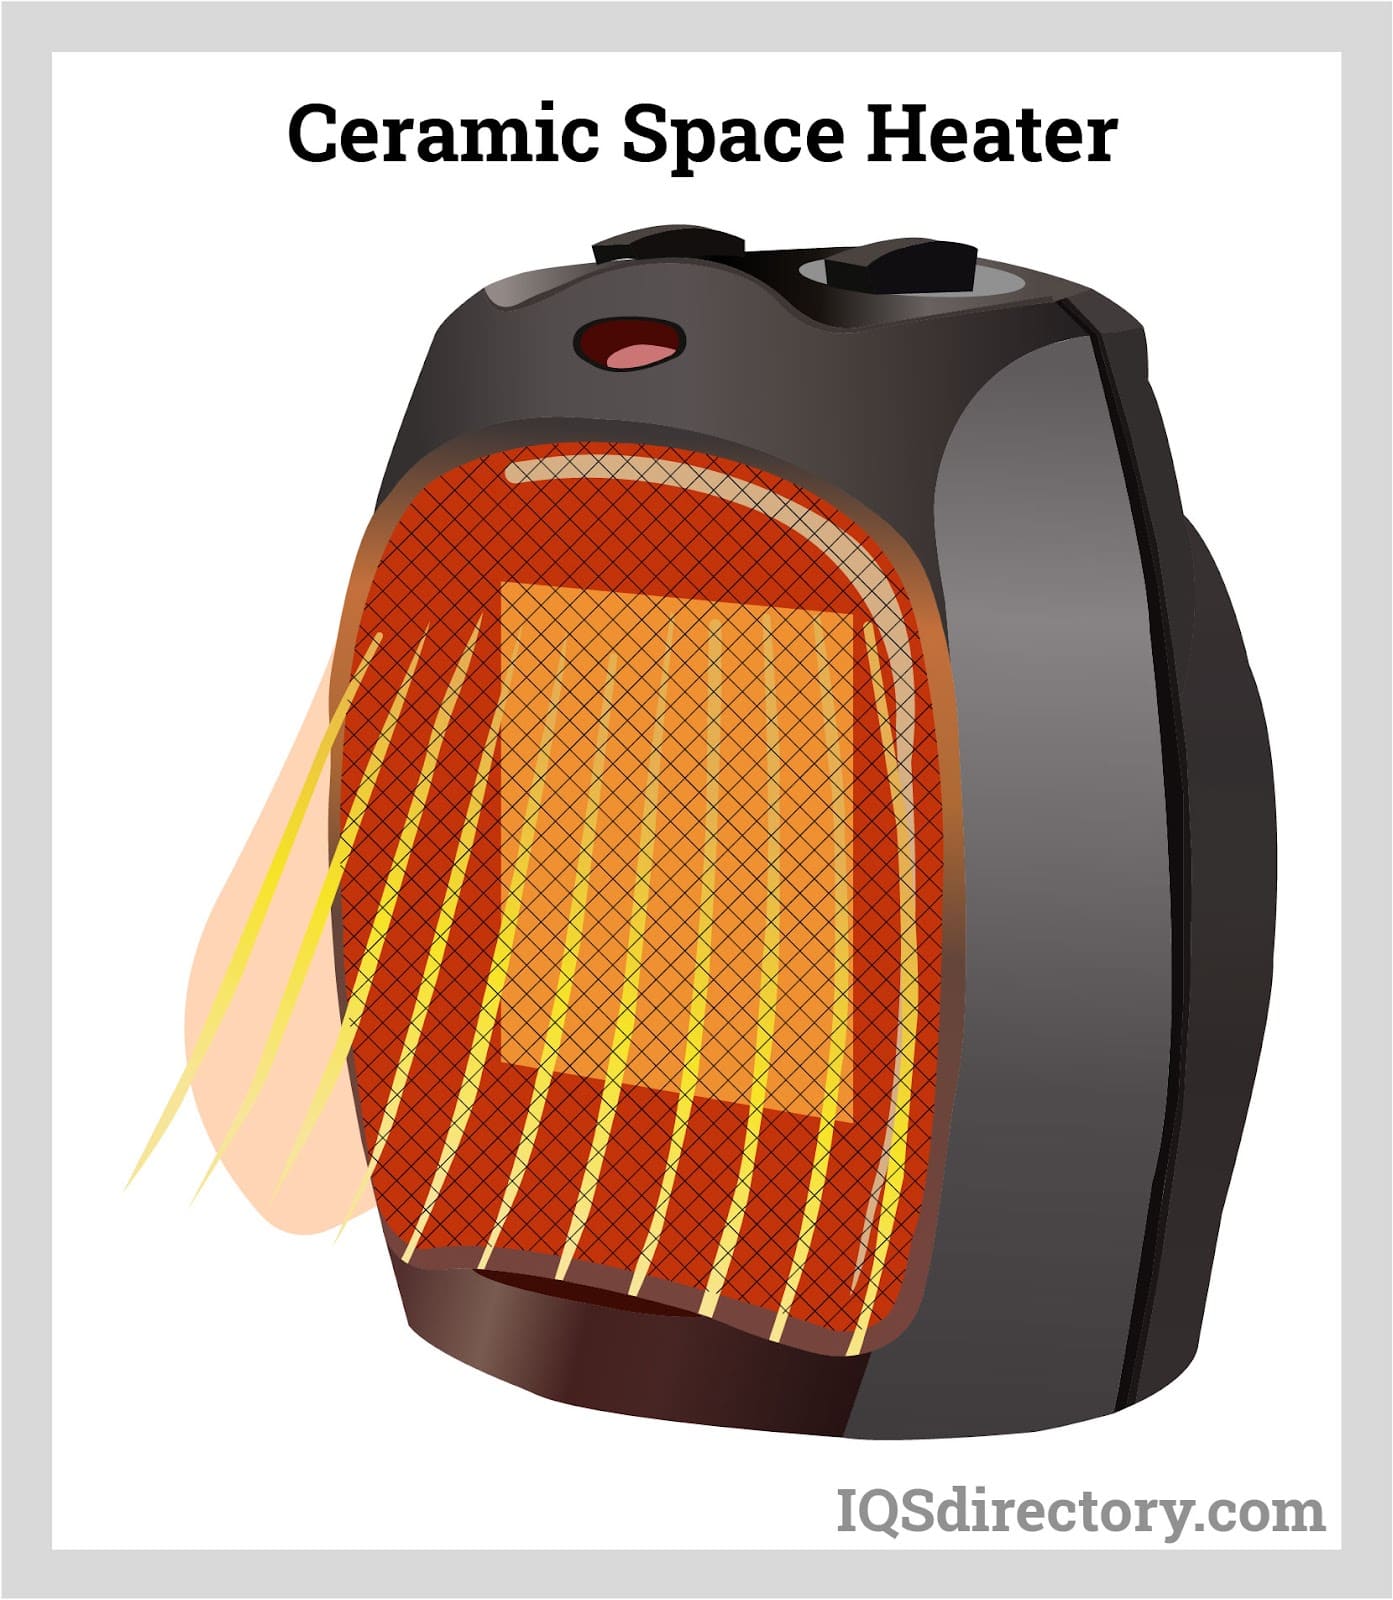 Ceramic Space Heater